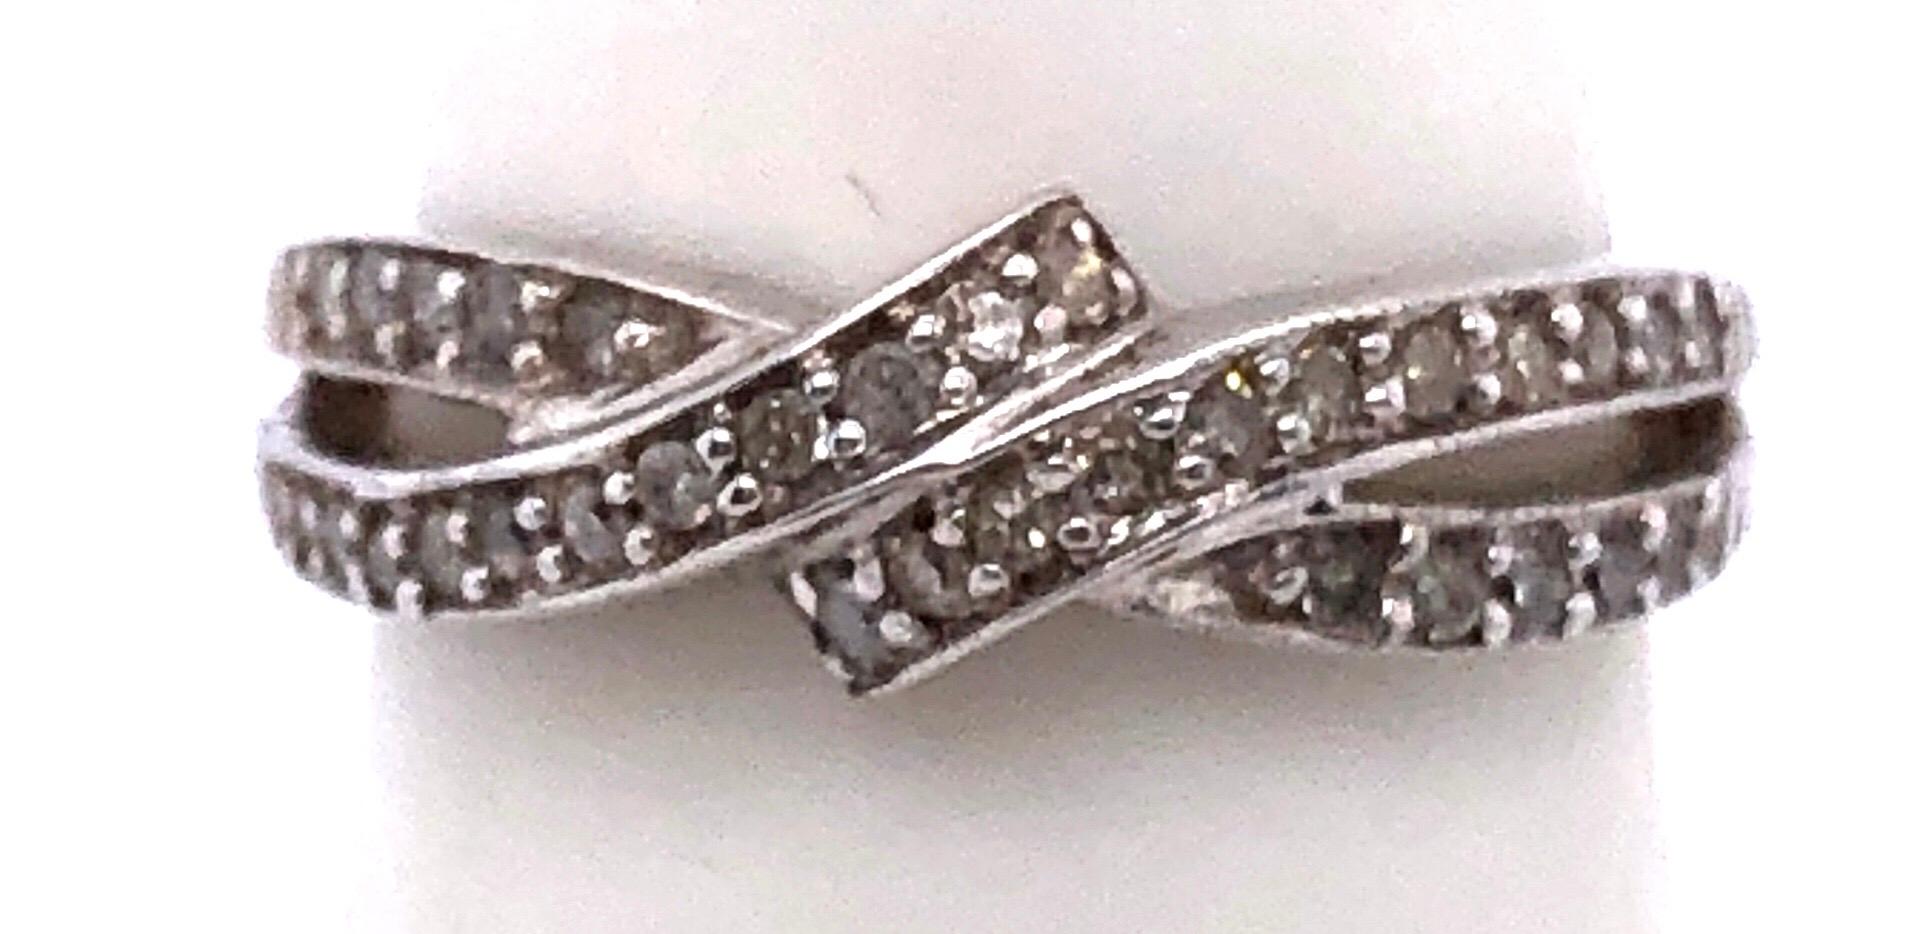 14 Karat White Gold Diamond Crossover Ring Wedding Band Size 7.
0.30 total diamond weight.
2.69 grams total weight.